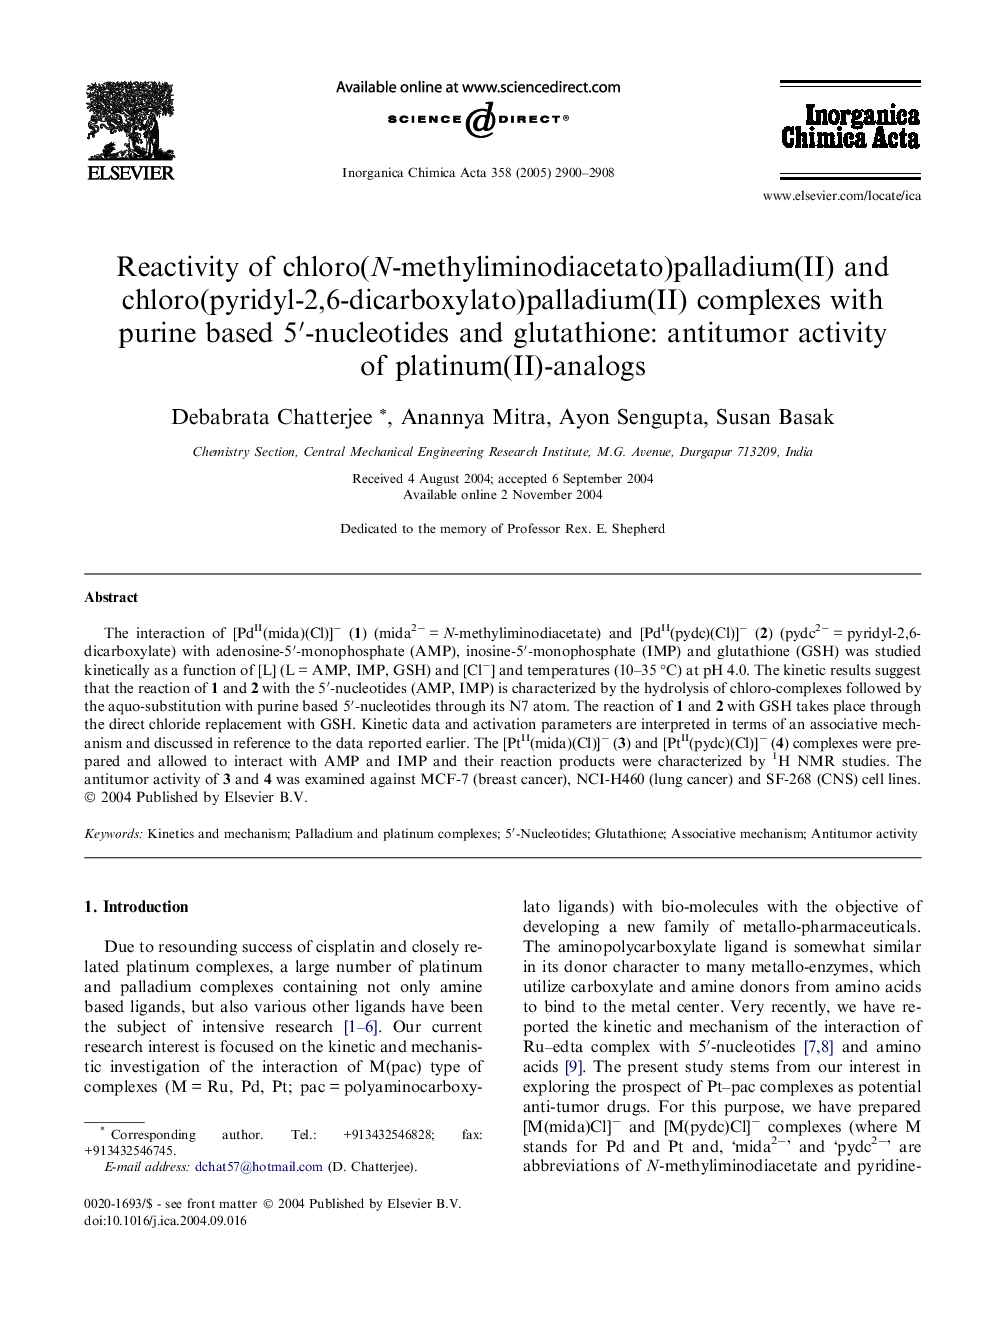 Reactivity of chloro(N-methyliminodiacetato)palladium(II) and chloro(pyridyl-2,6-dicarboxylato)palladium(II) complexes with purine based 5′-nucleotides and glutathione: antitumor activity of platinum(II)-analogs